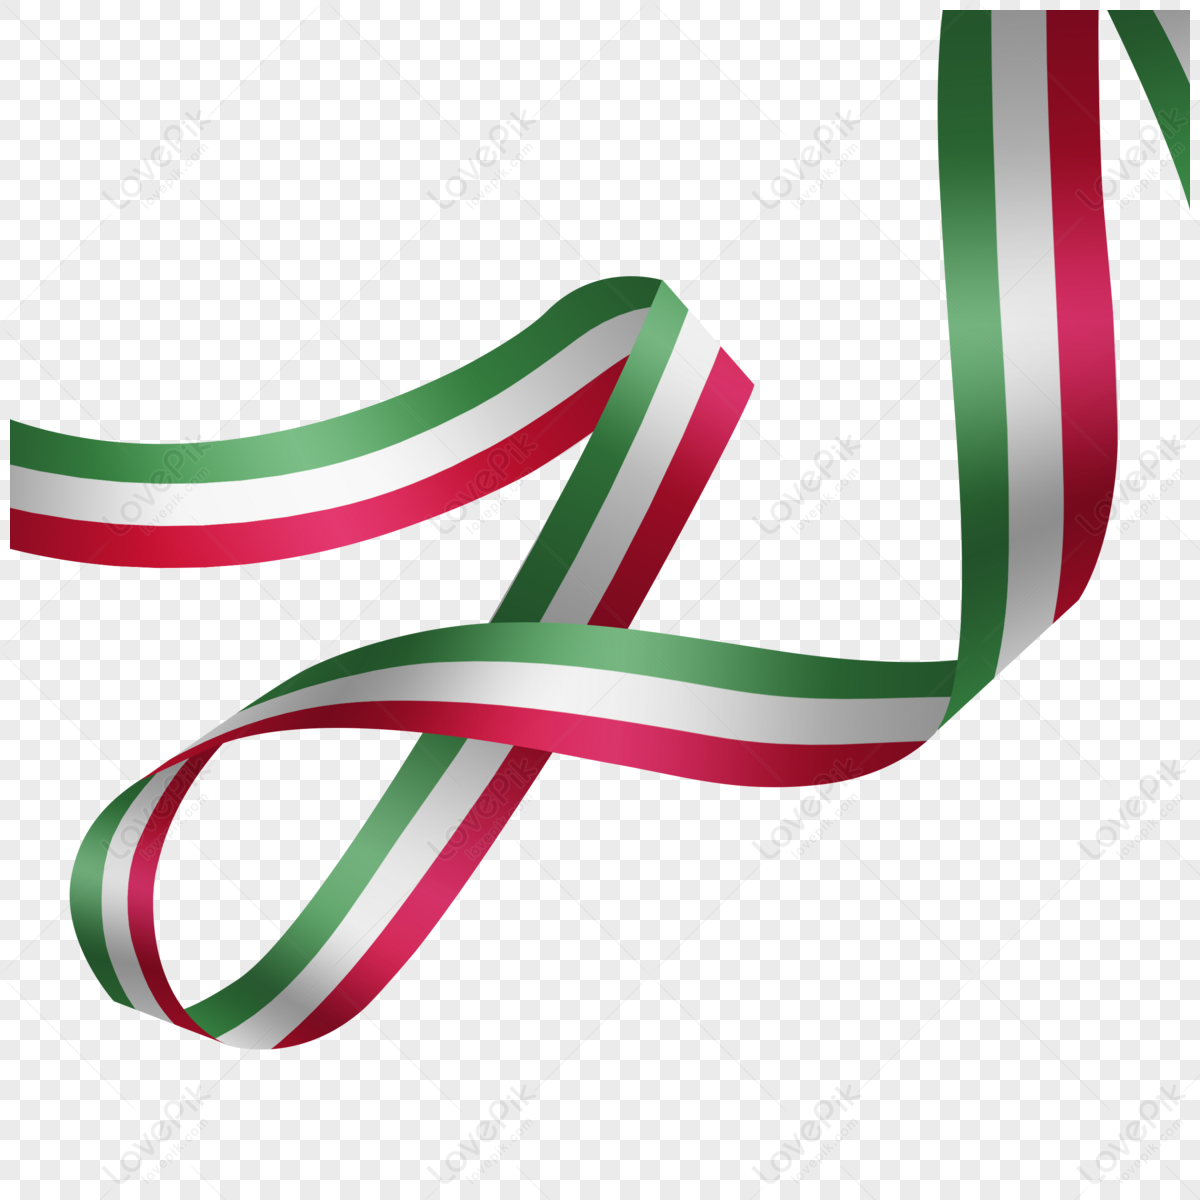 Abstract Green White Red Waving Ribbon Flag Royalty Free SVG, Cliparts,  Vectors, and Stock Illustration. Image 24429214.